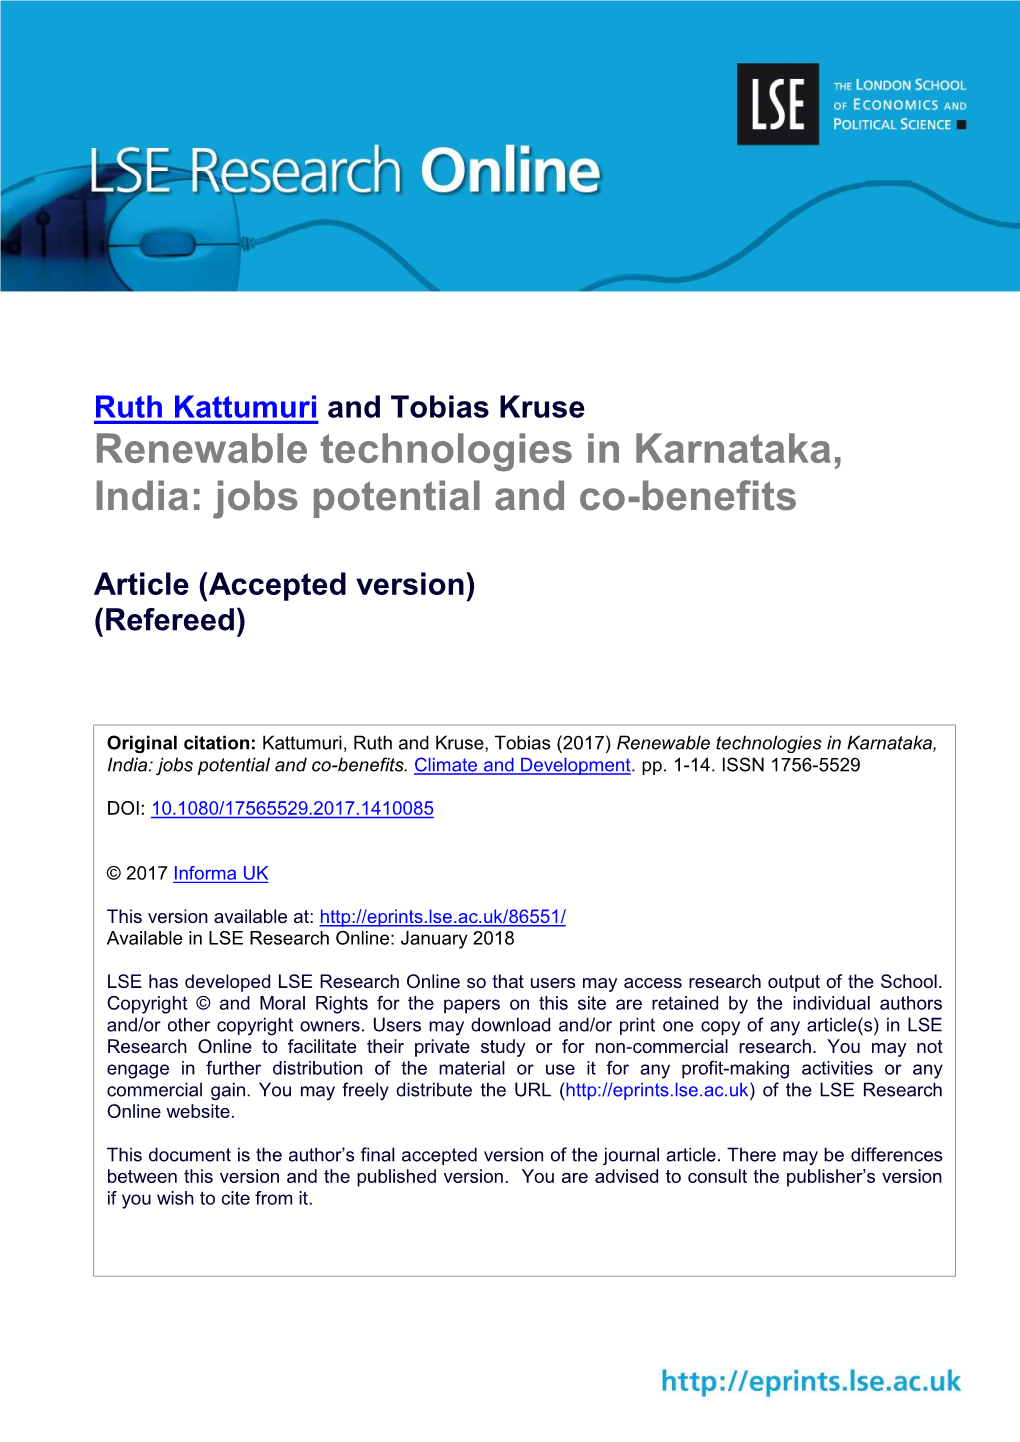 Renewable Technologies in Karnataka, India: Jobs Potential and Co-Benefits